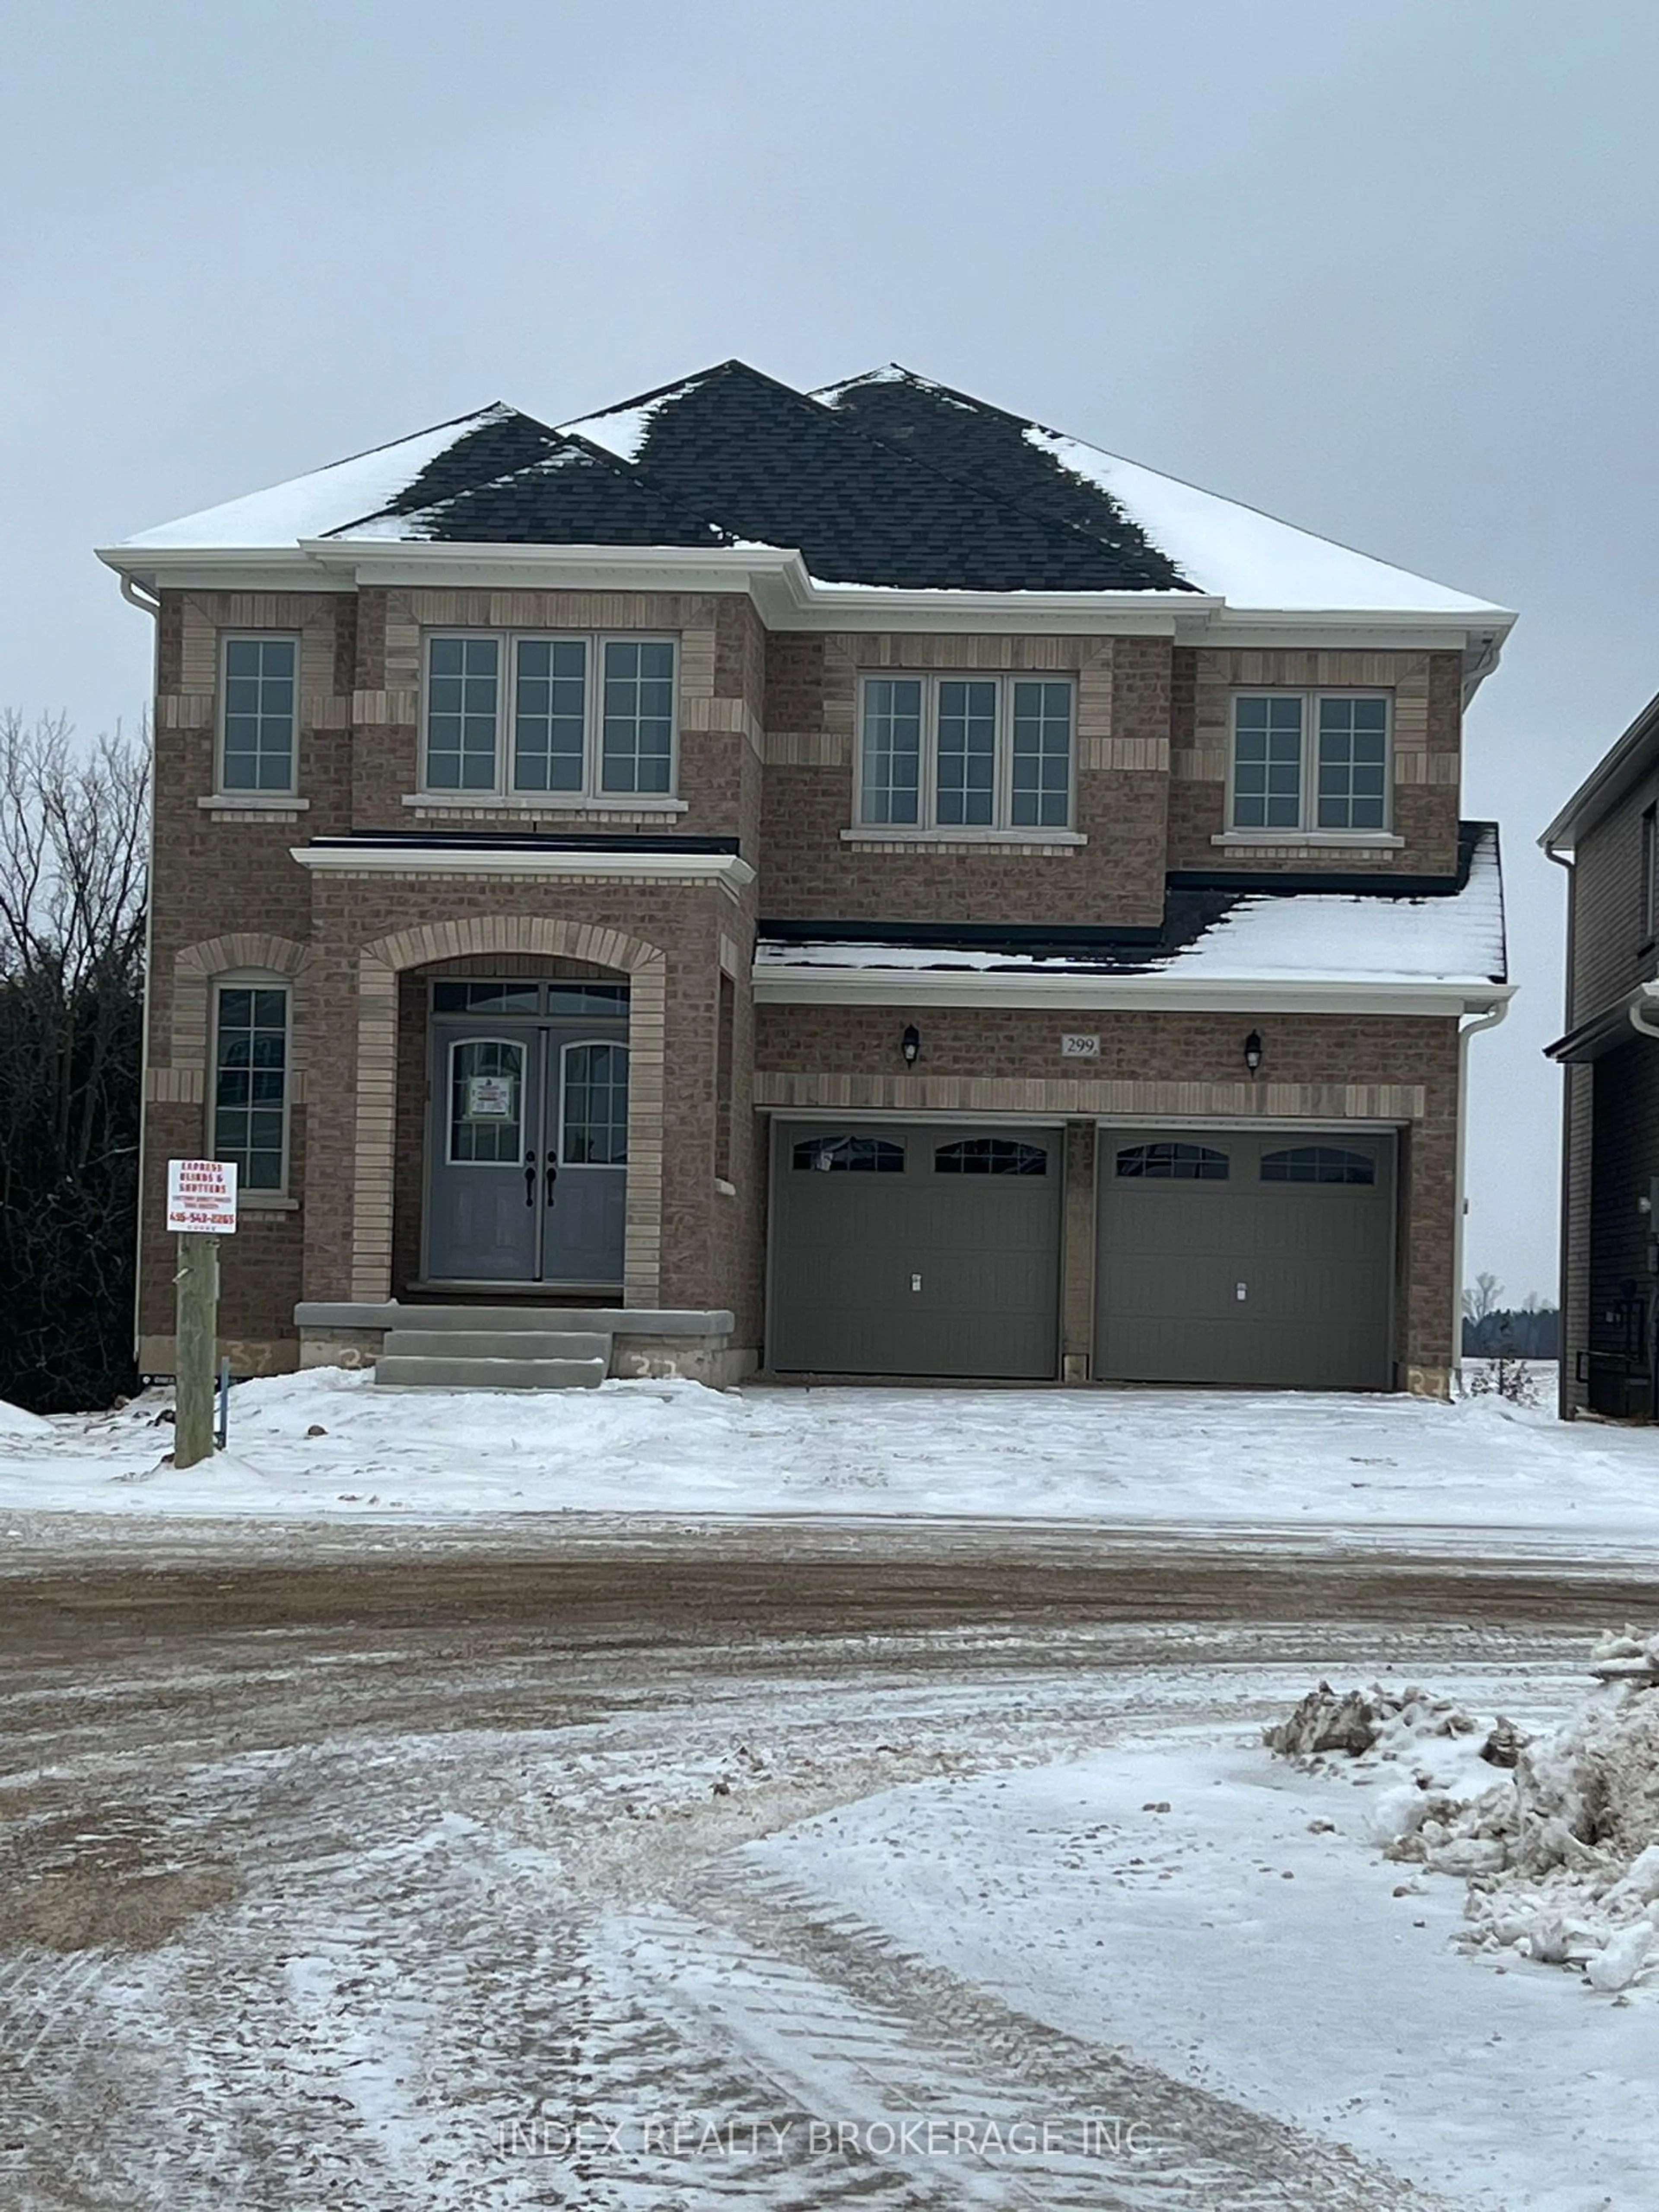 Home with brick exterior material for 299 Trillium Crt, Shelburne Ontario L9V 1Y3